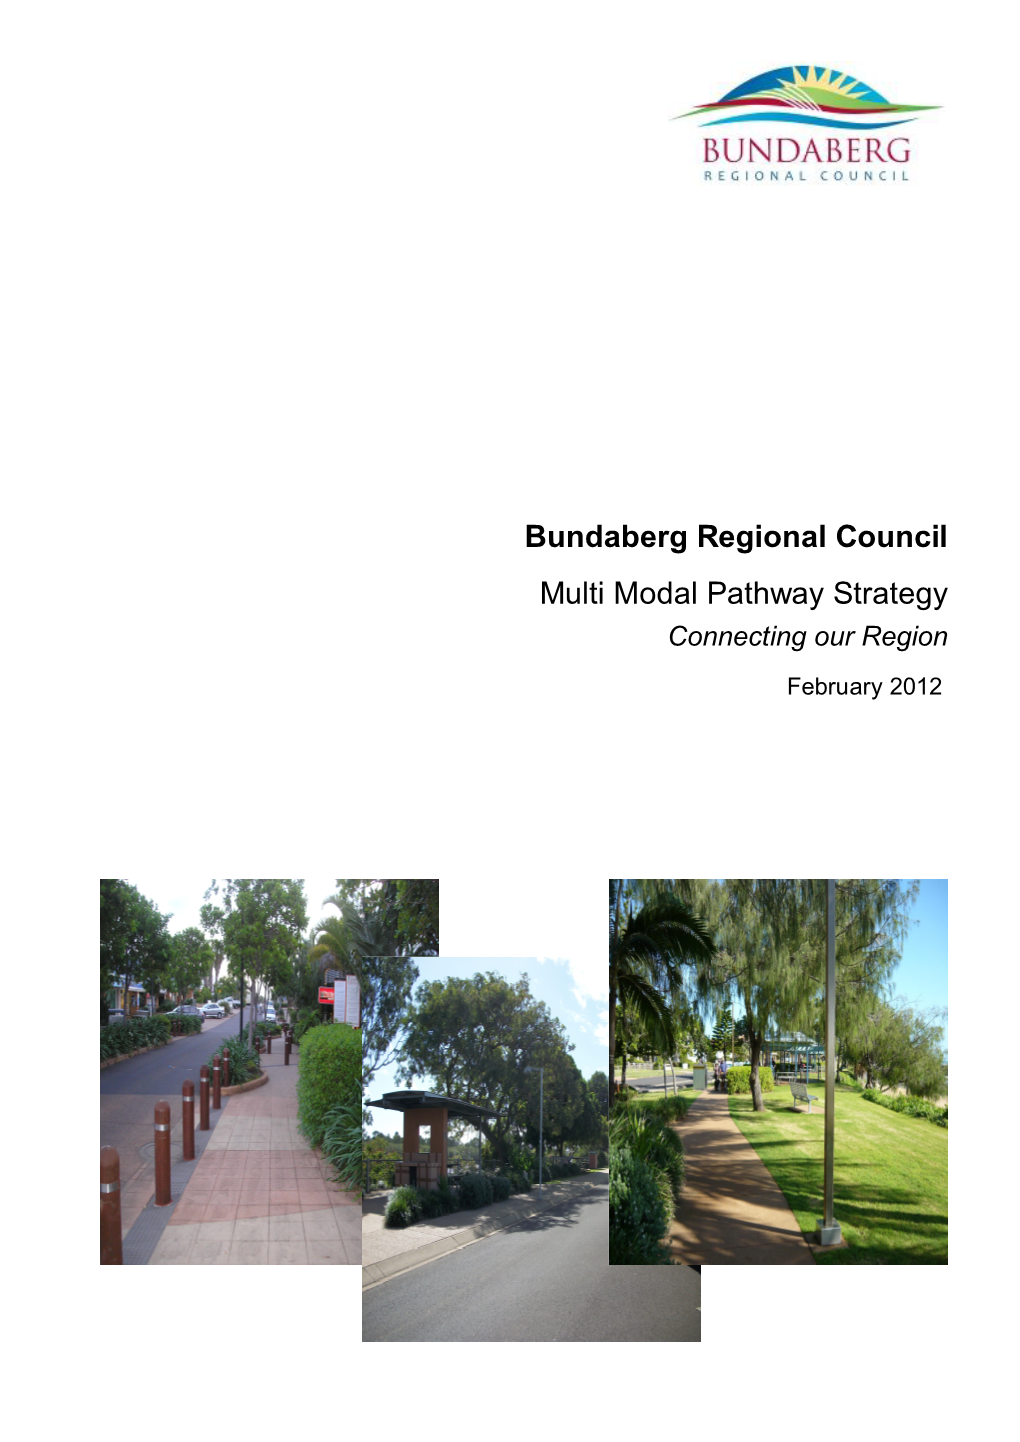 Bundaberg Regional Council Multi Modal Pathway Strategy Connecting Our Region